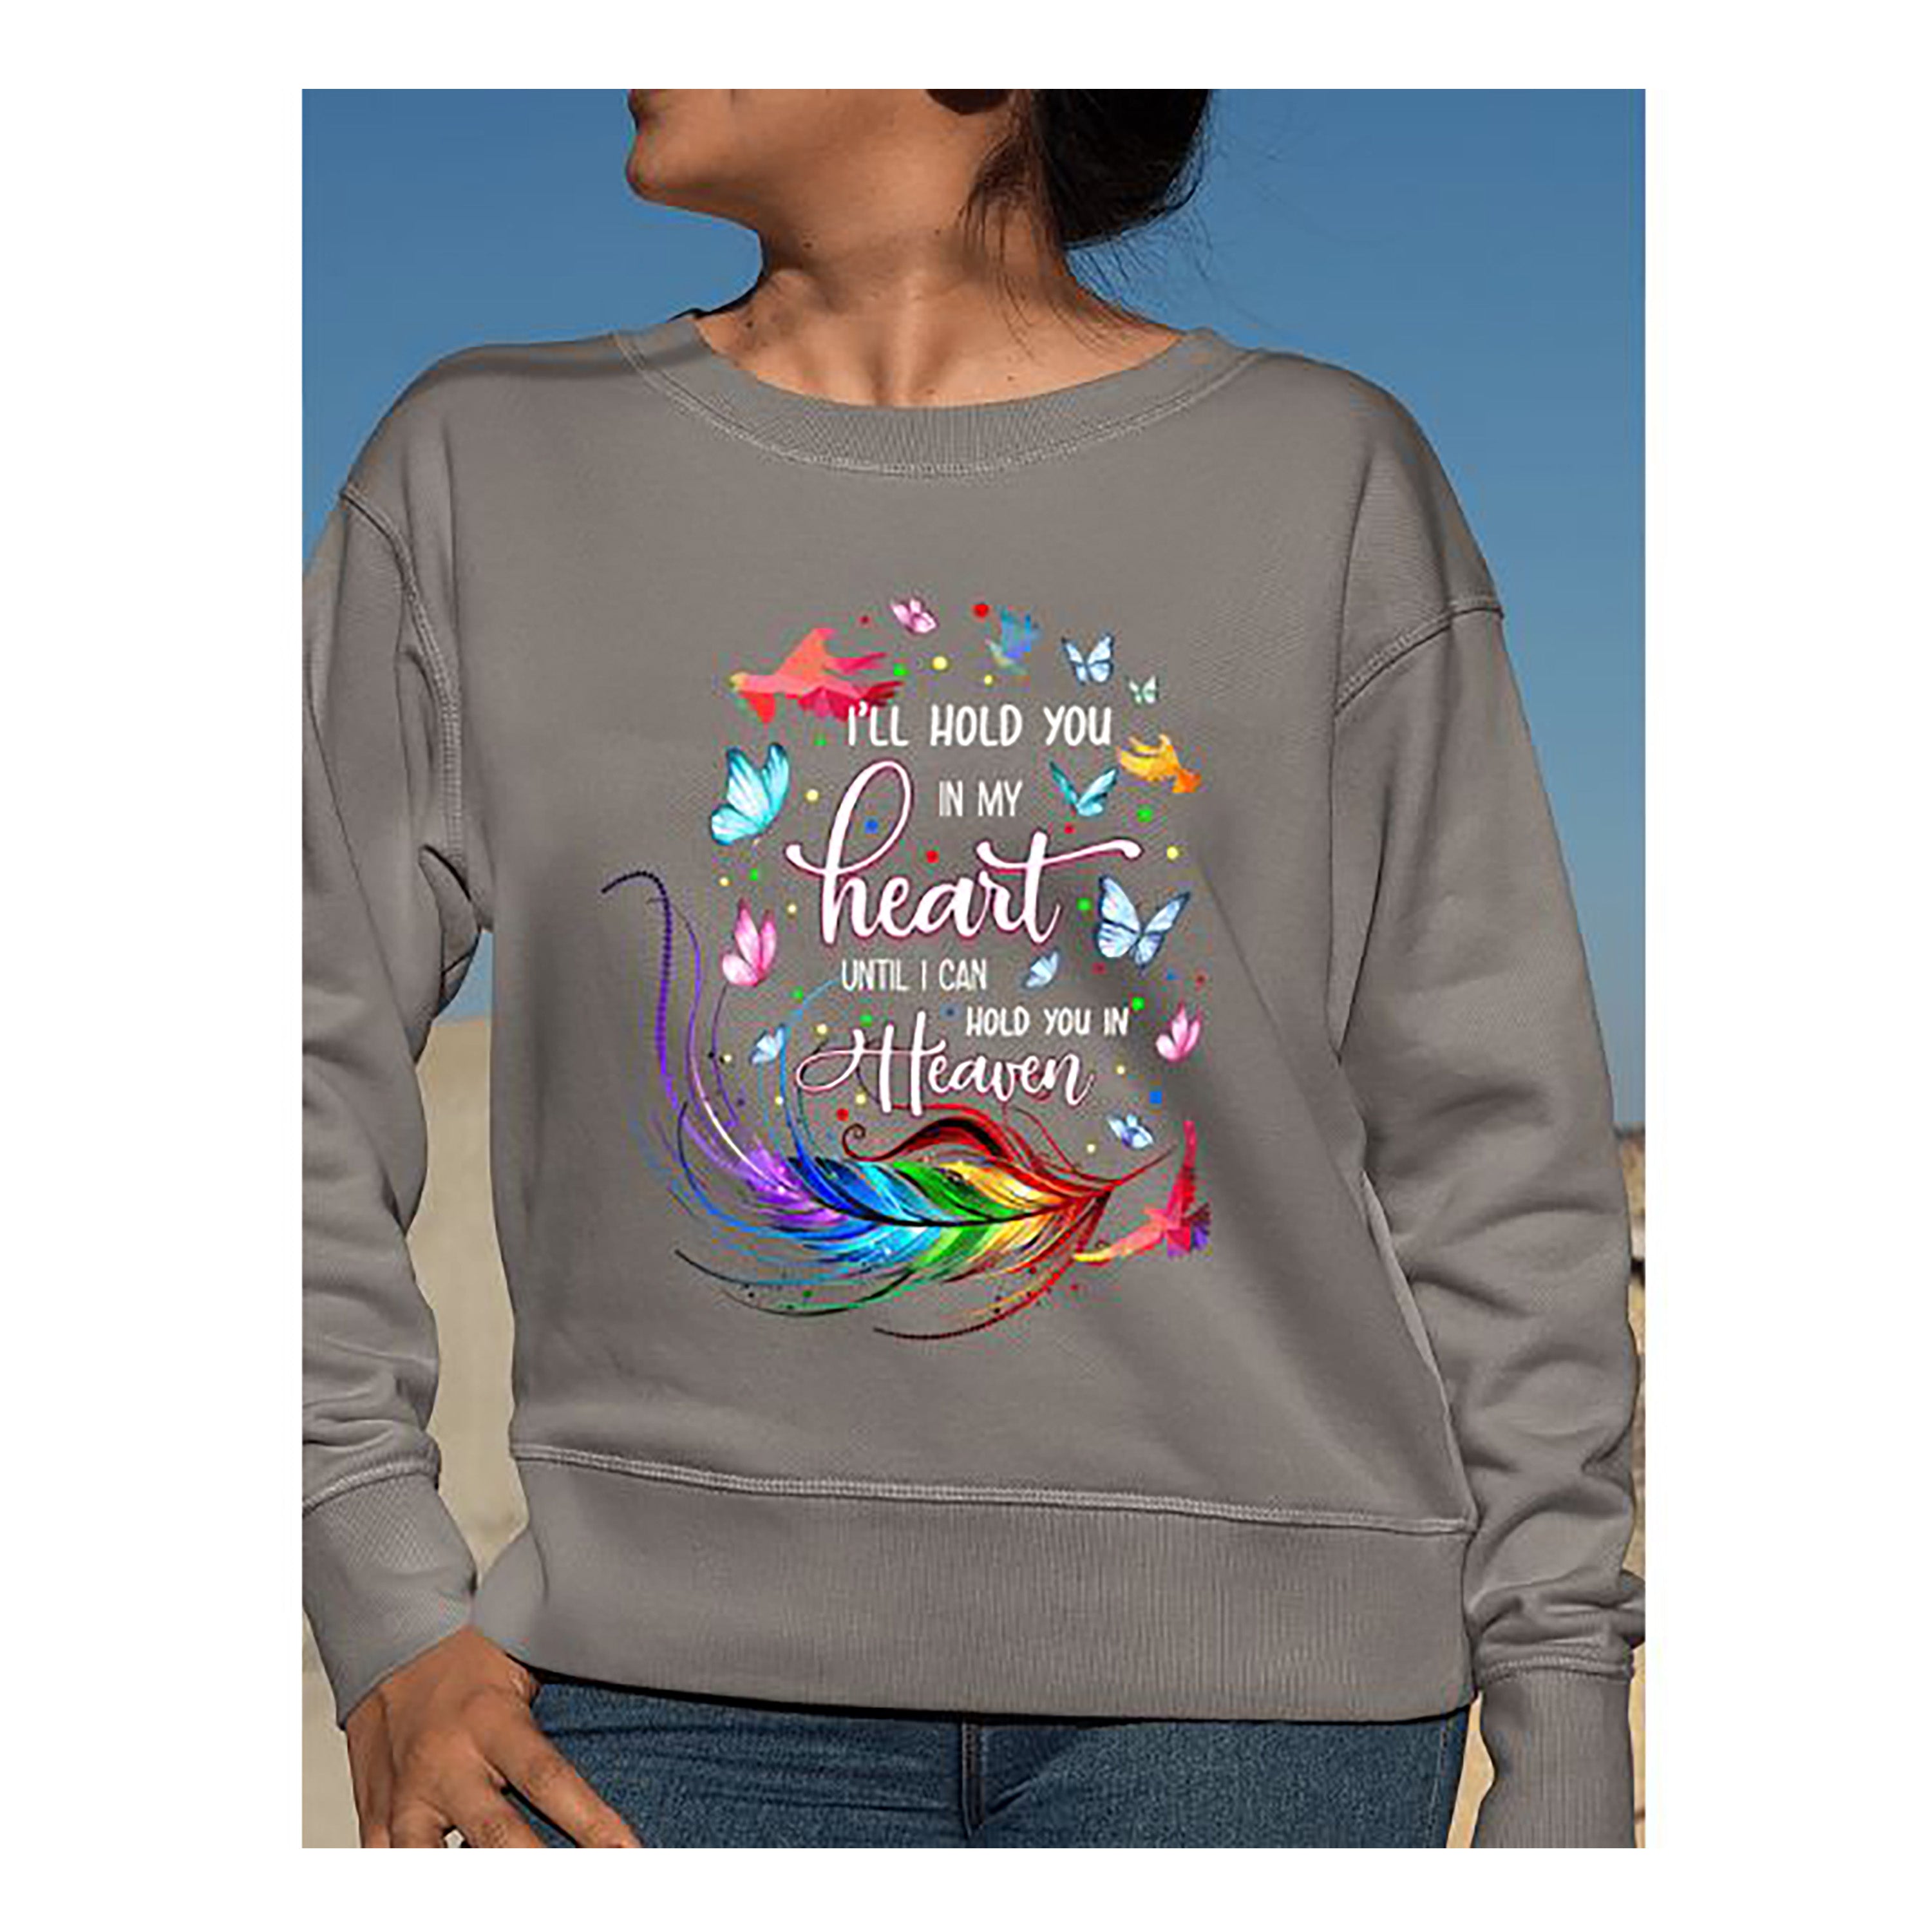 "I'LL HOLD YOU IN MY HEART" Hoodie & Sweatshirt